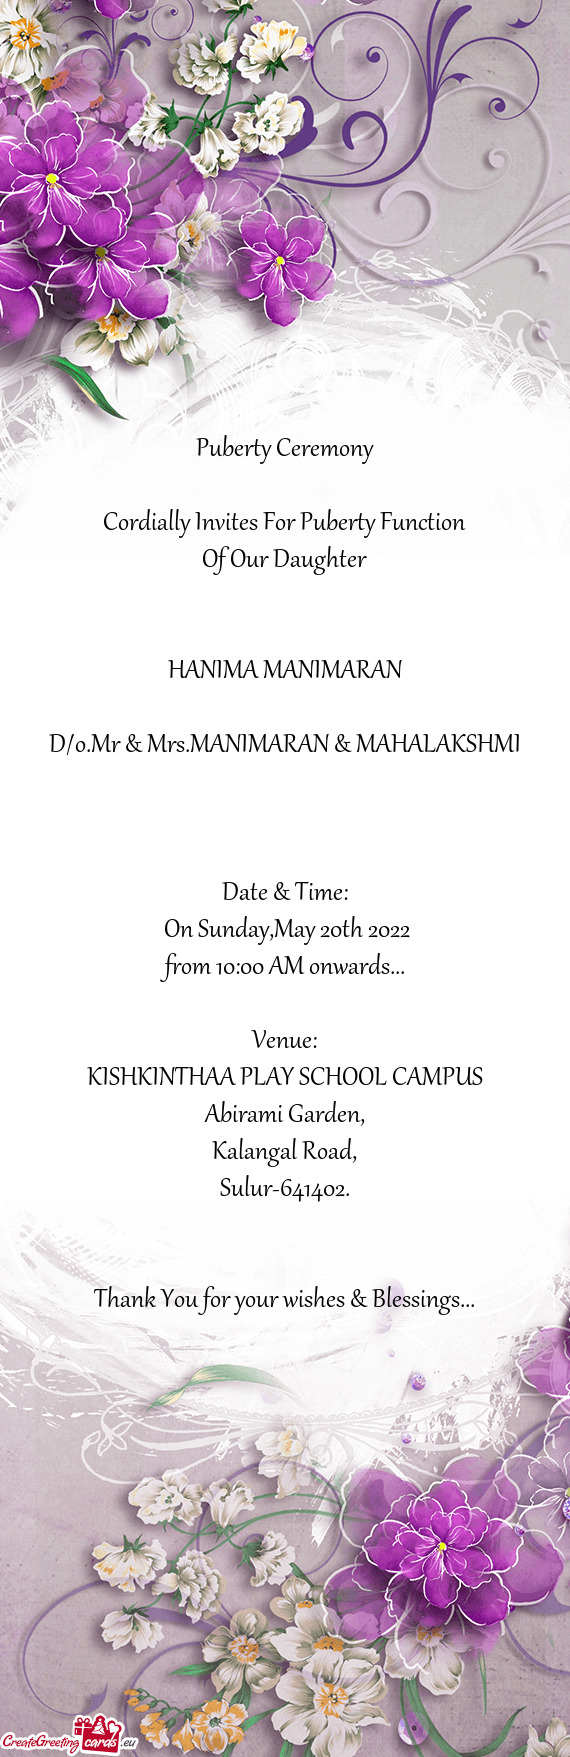 D/o.Mr & Mrs.MANIMARAN & MAHALAKSHMI